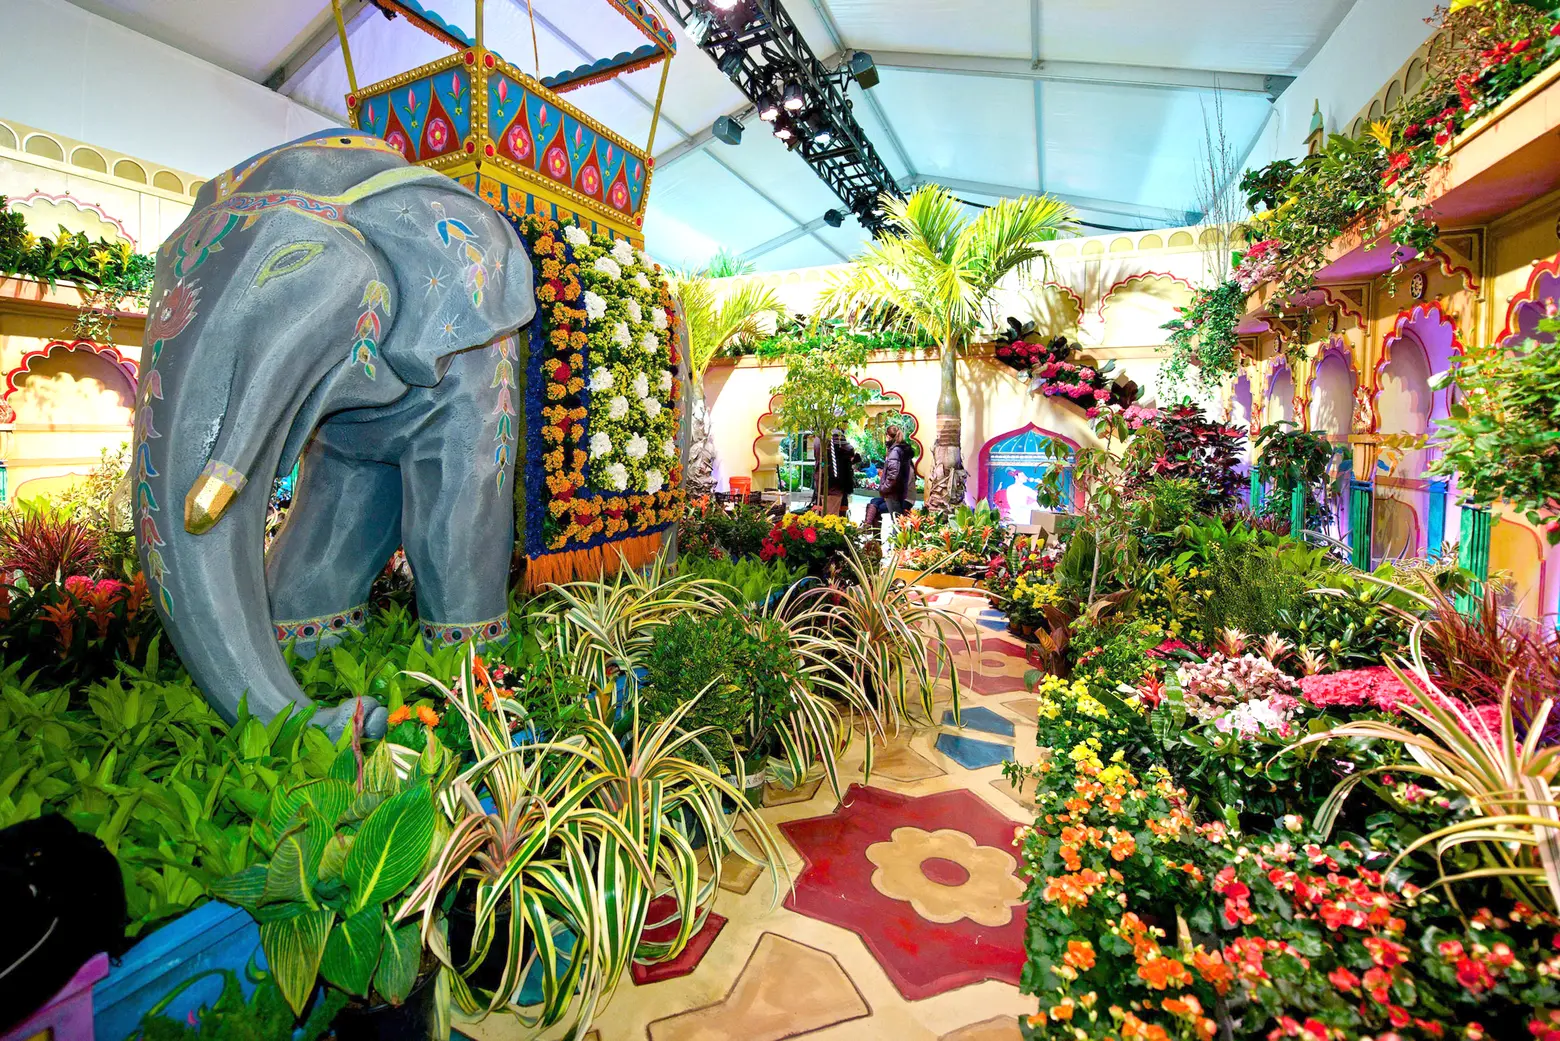 Macy's Flower Show, Macy's Herald Square, flower sculptures, department store displays